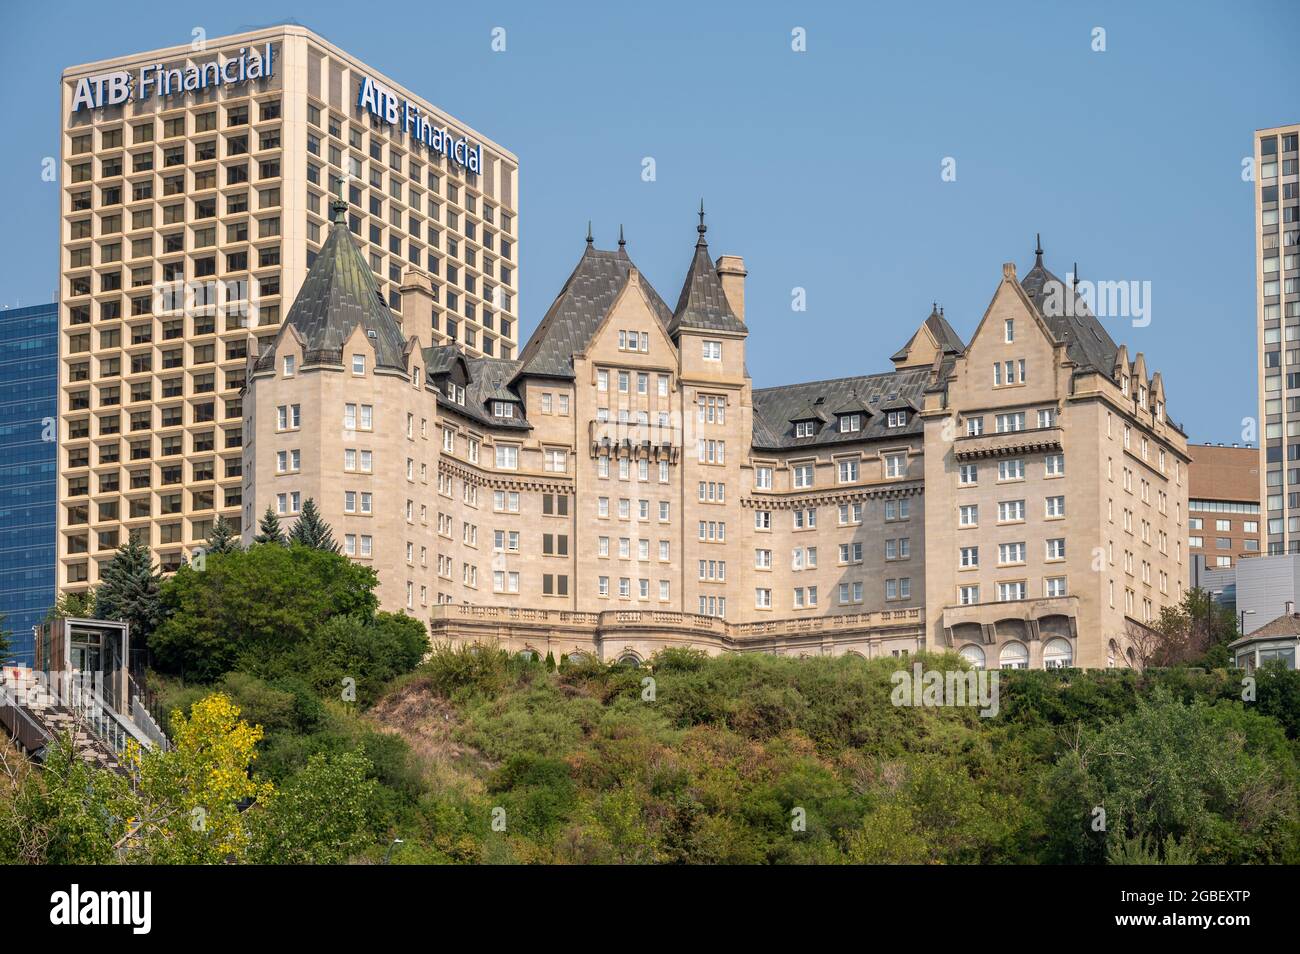 Edmonton, Alberta - July 30, 2021: View of the Hotel Macdonald in edmonton. Stock Photo